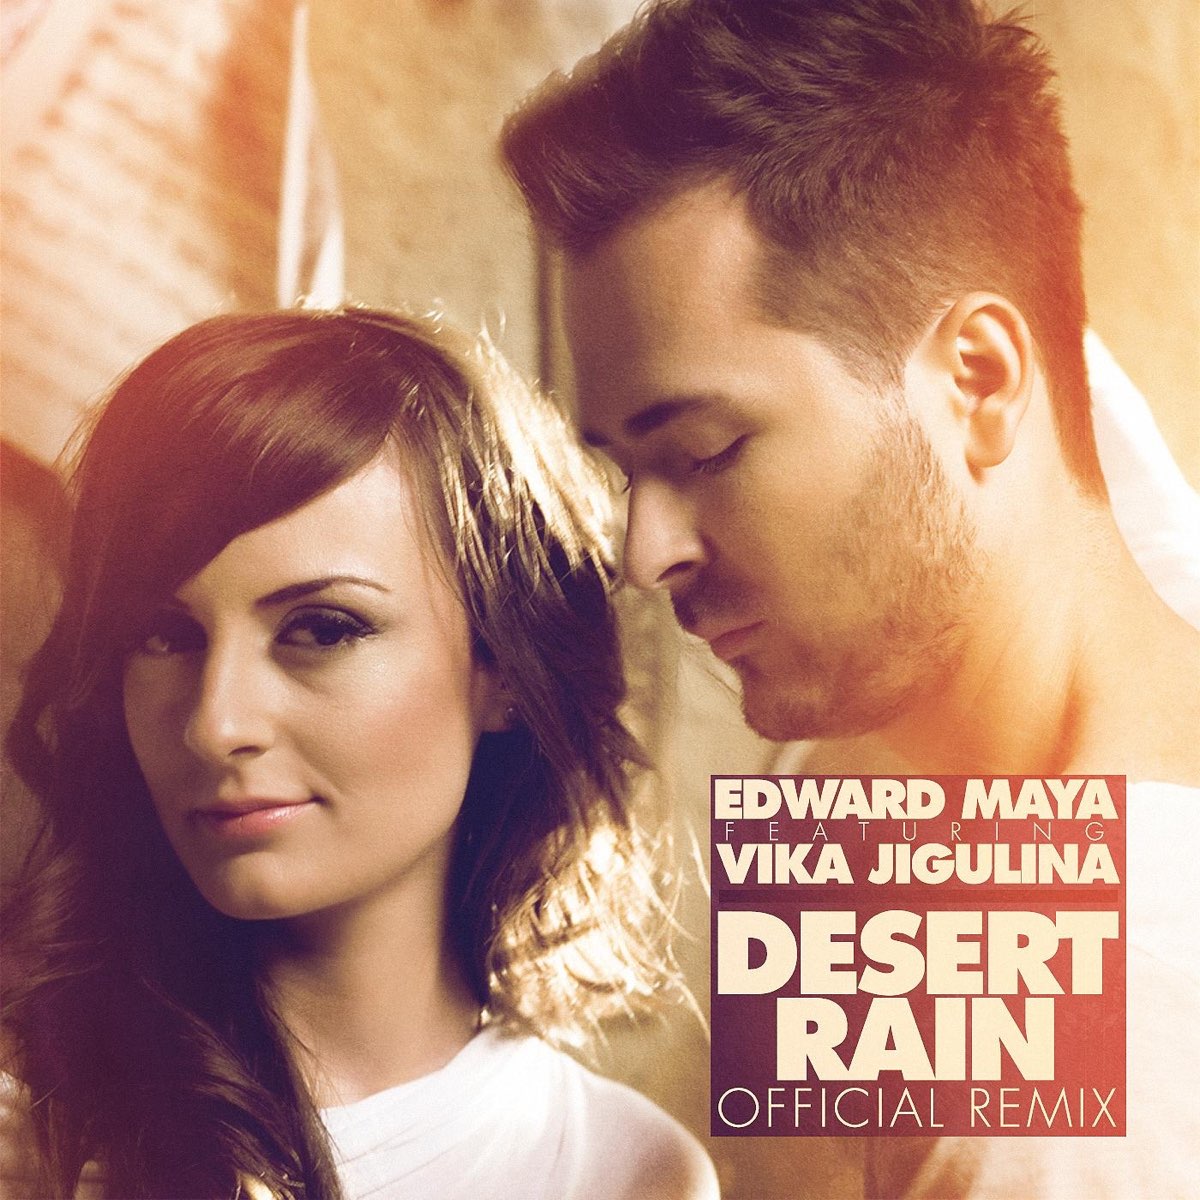 Stereo love edward maya vika remix. Desert Rain Вика Жигулина. Edward Maya Desert Rain album.